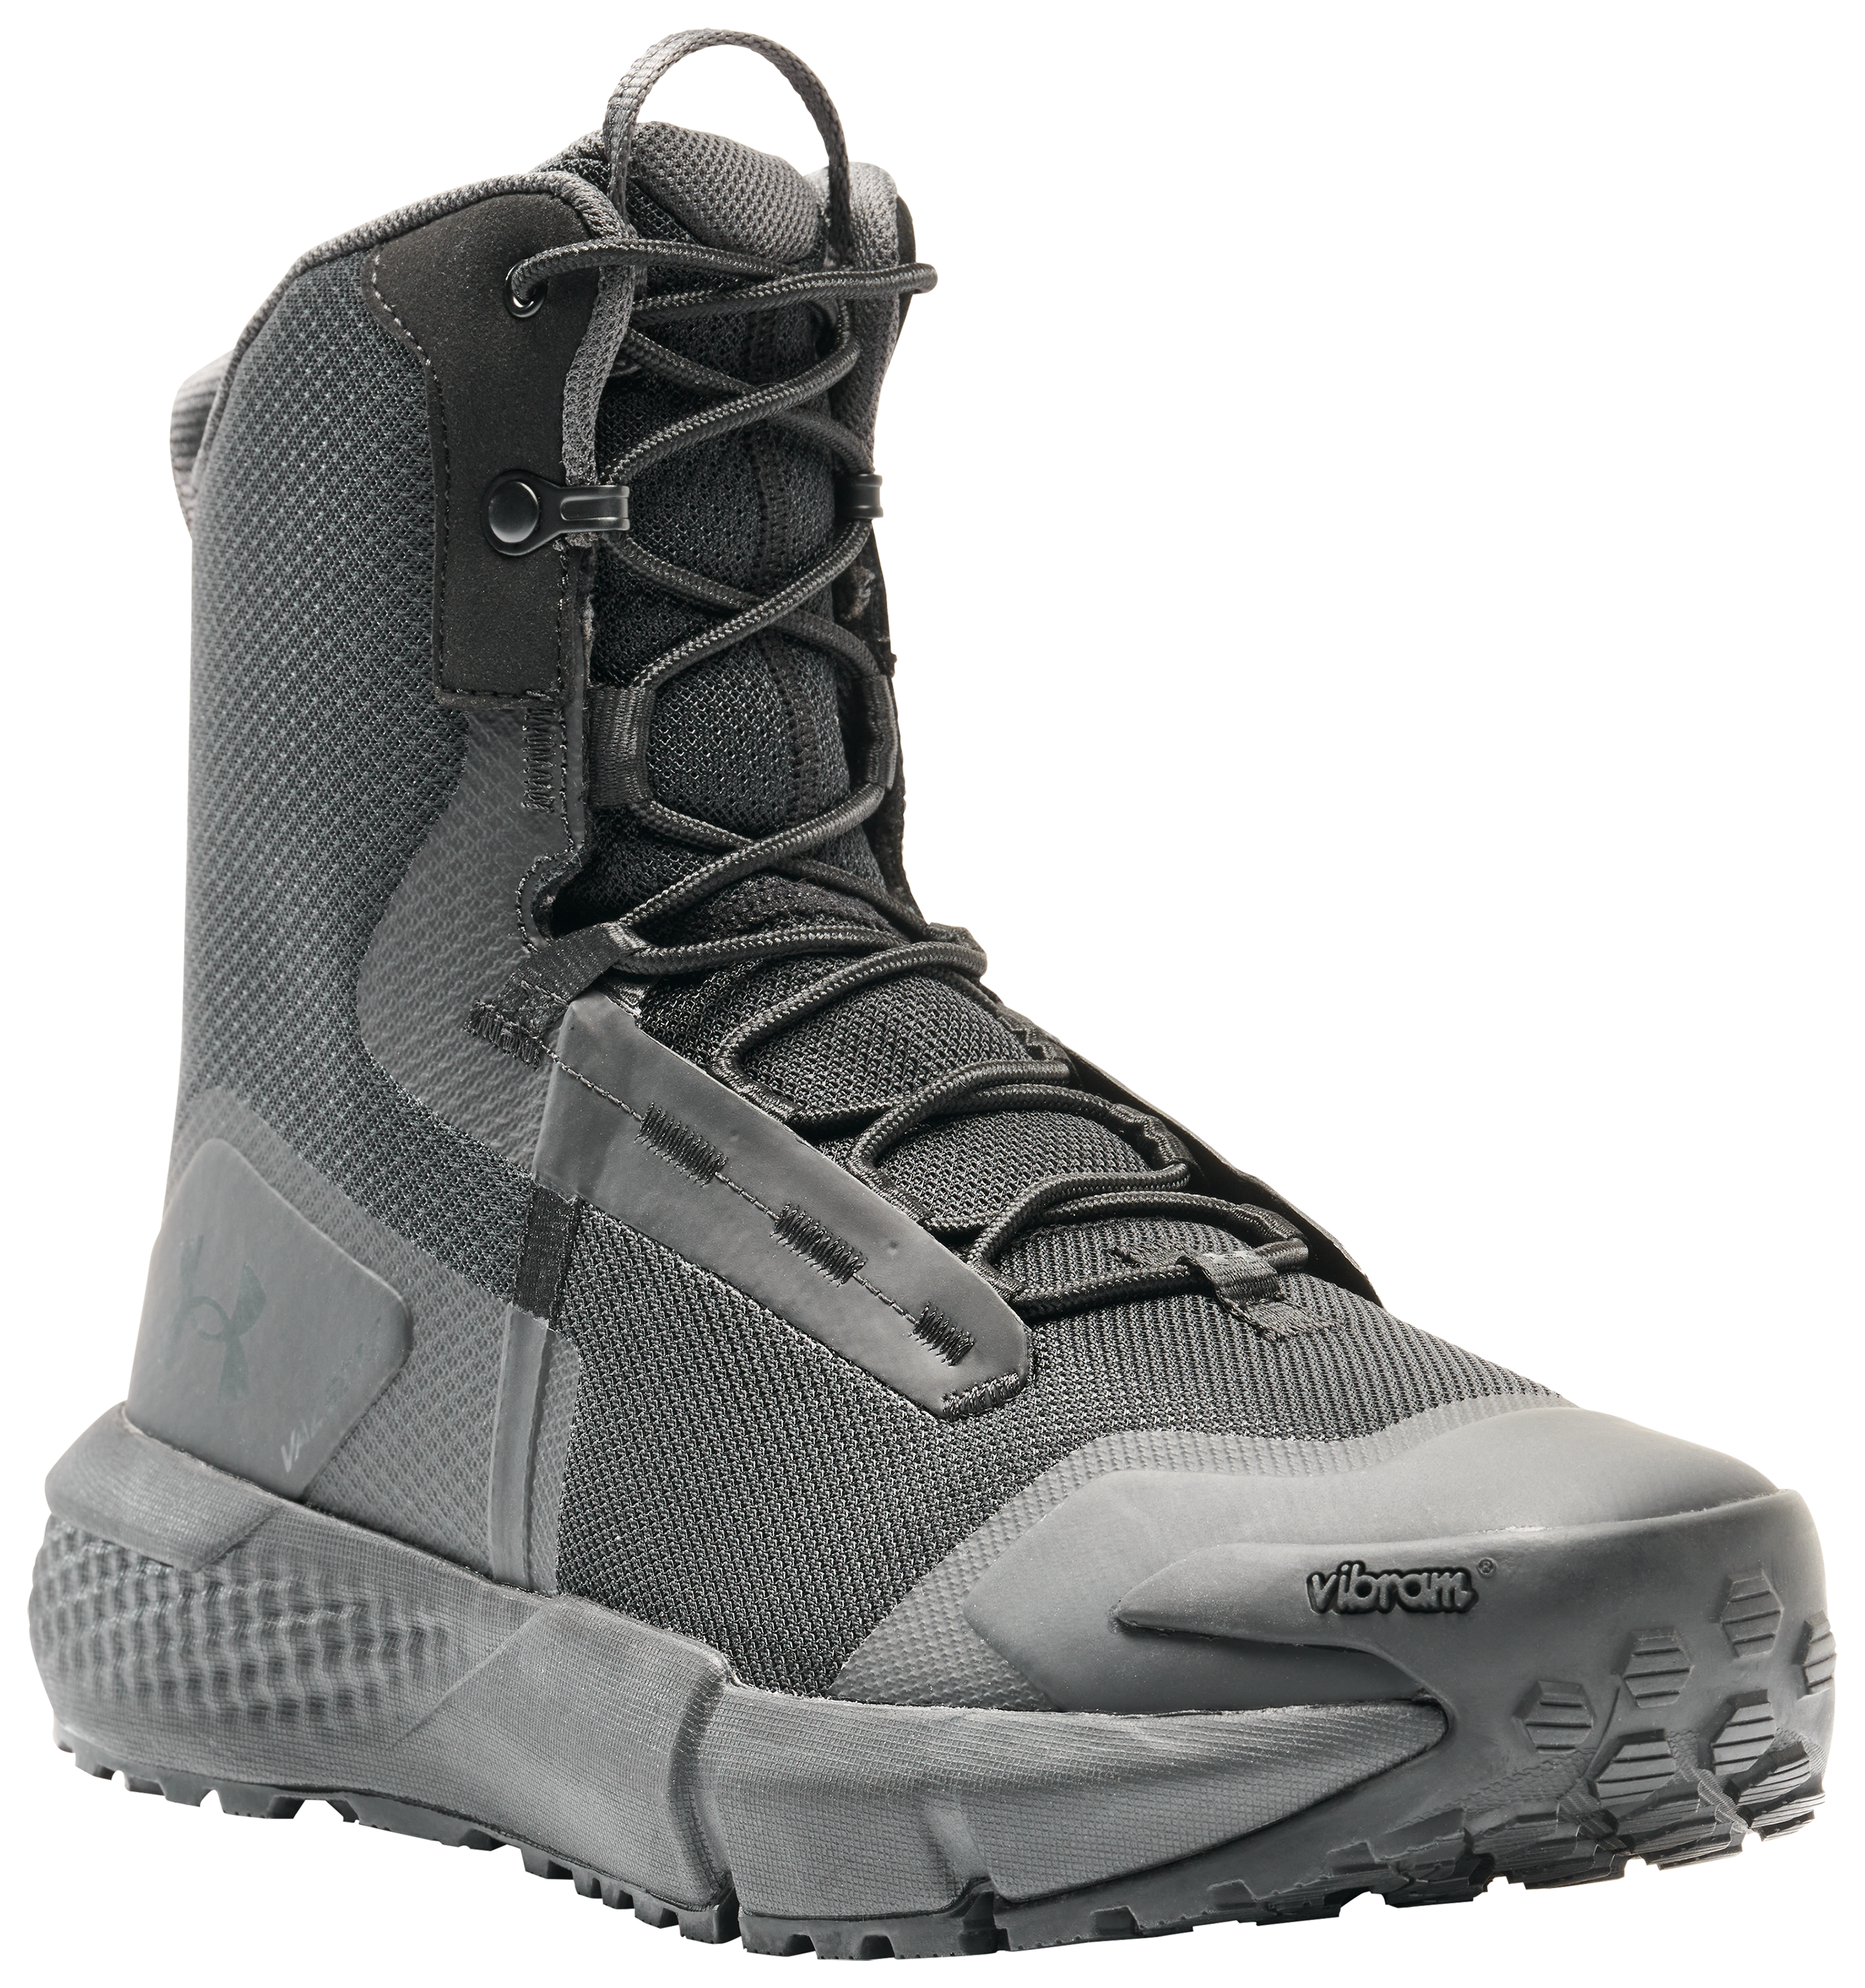 Under Armour Valsetz Side Zip Tactical Boots for Men - Black - 10M